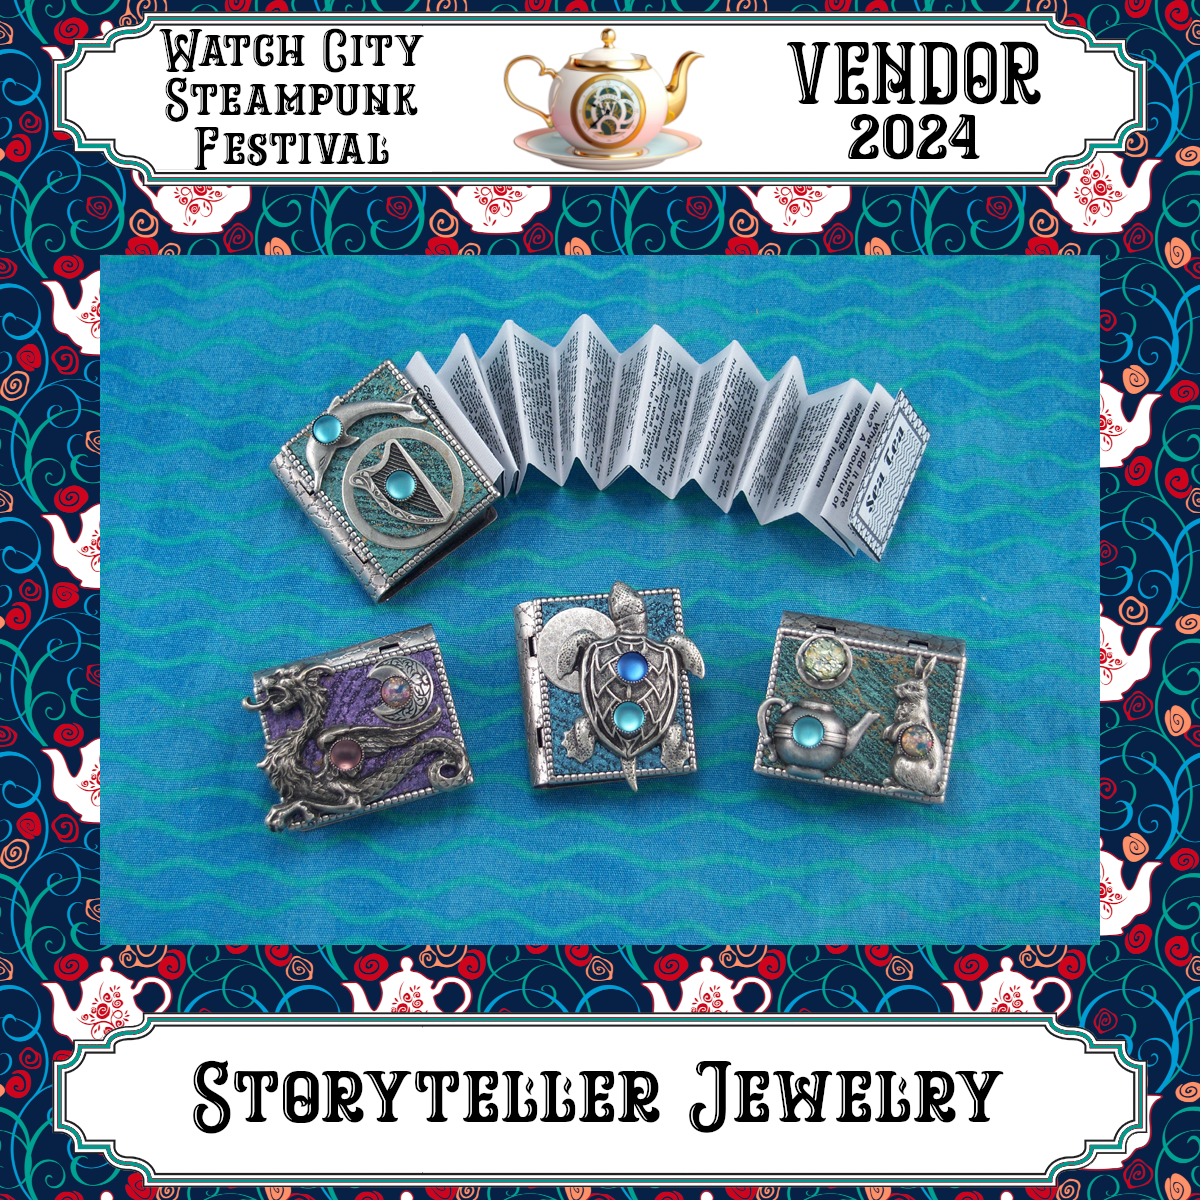 Storyteller Jewelry